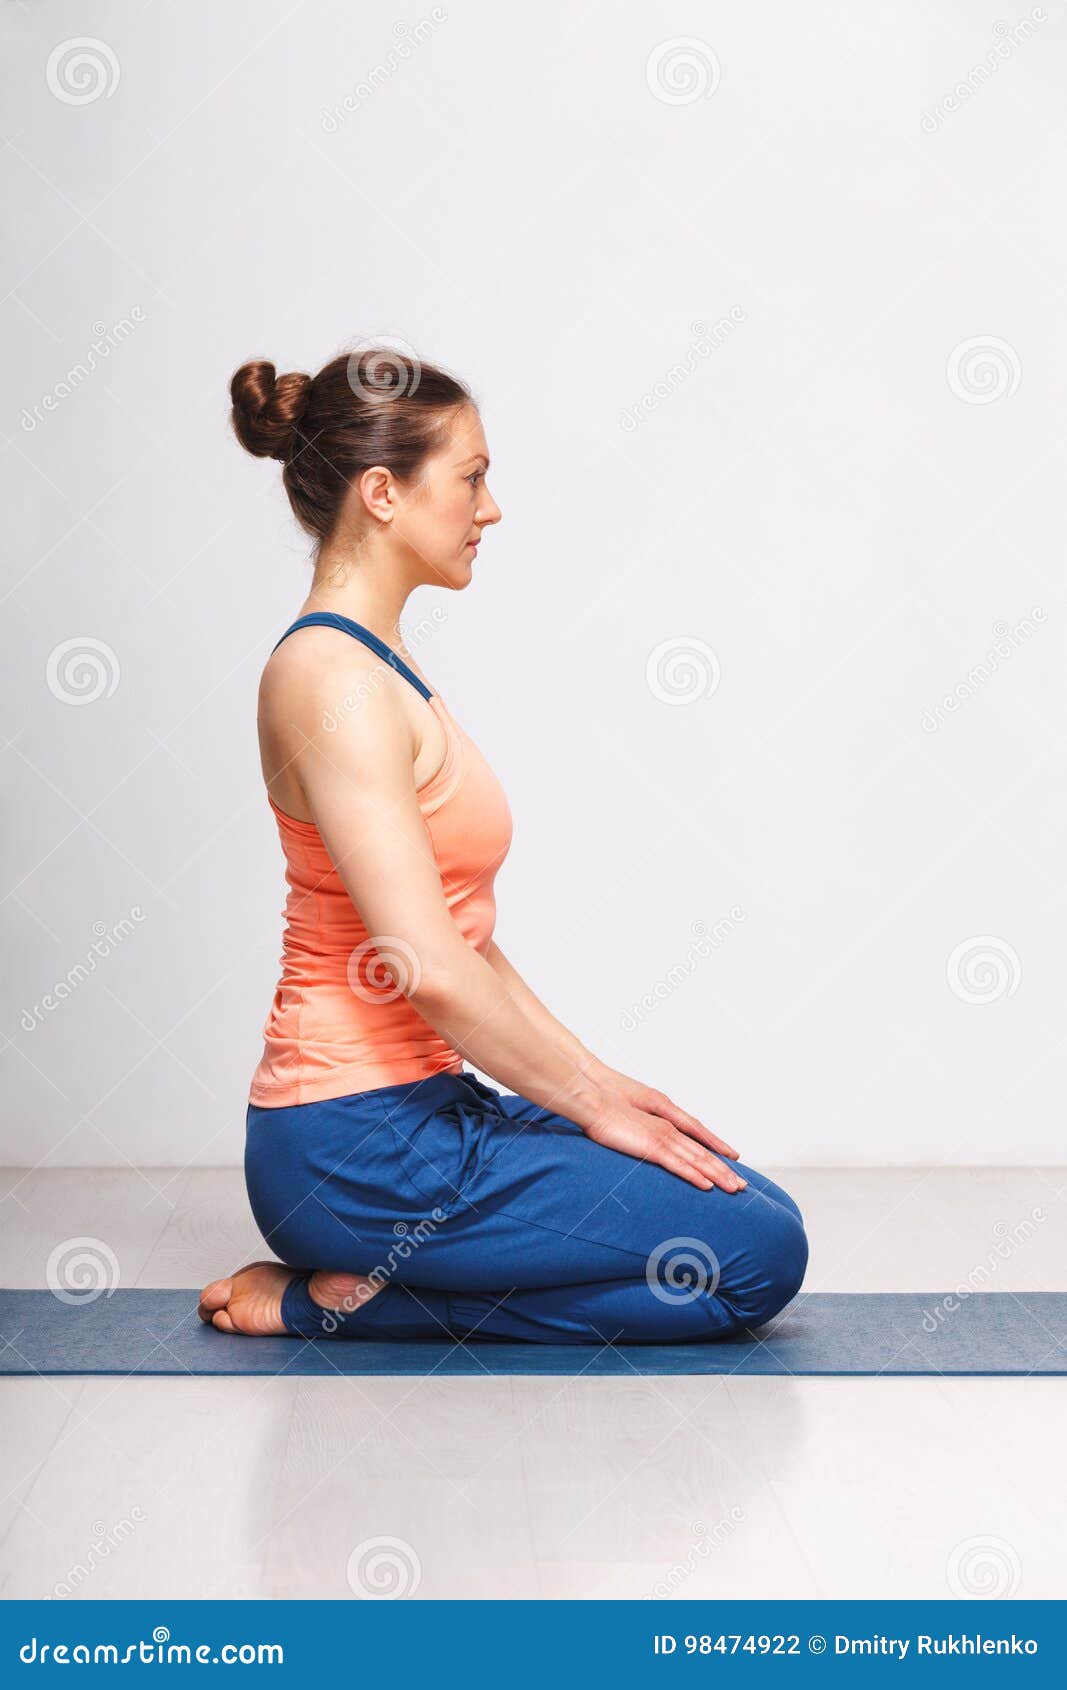 How To Do Yoga Rock Pose Correctly